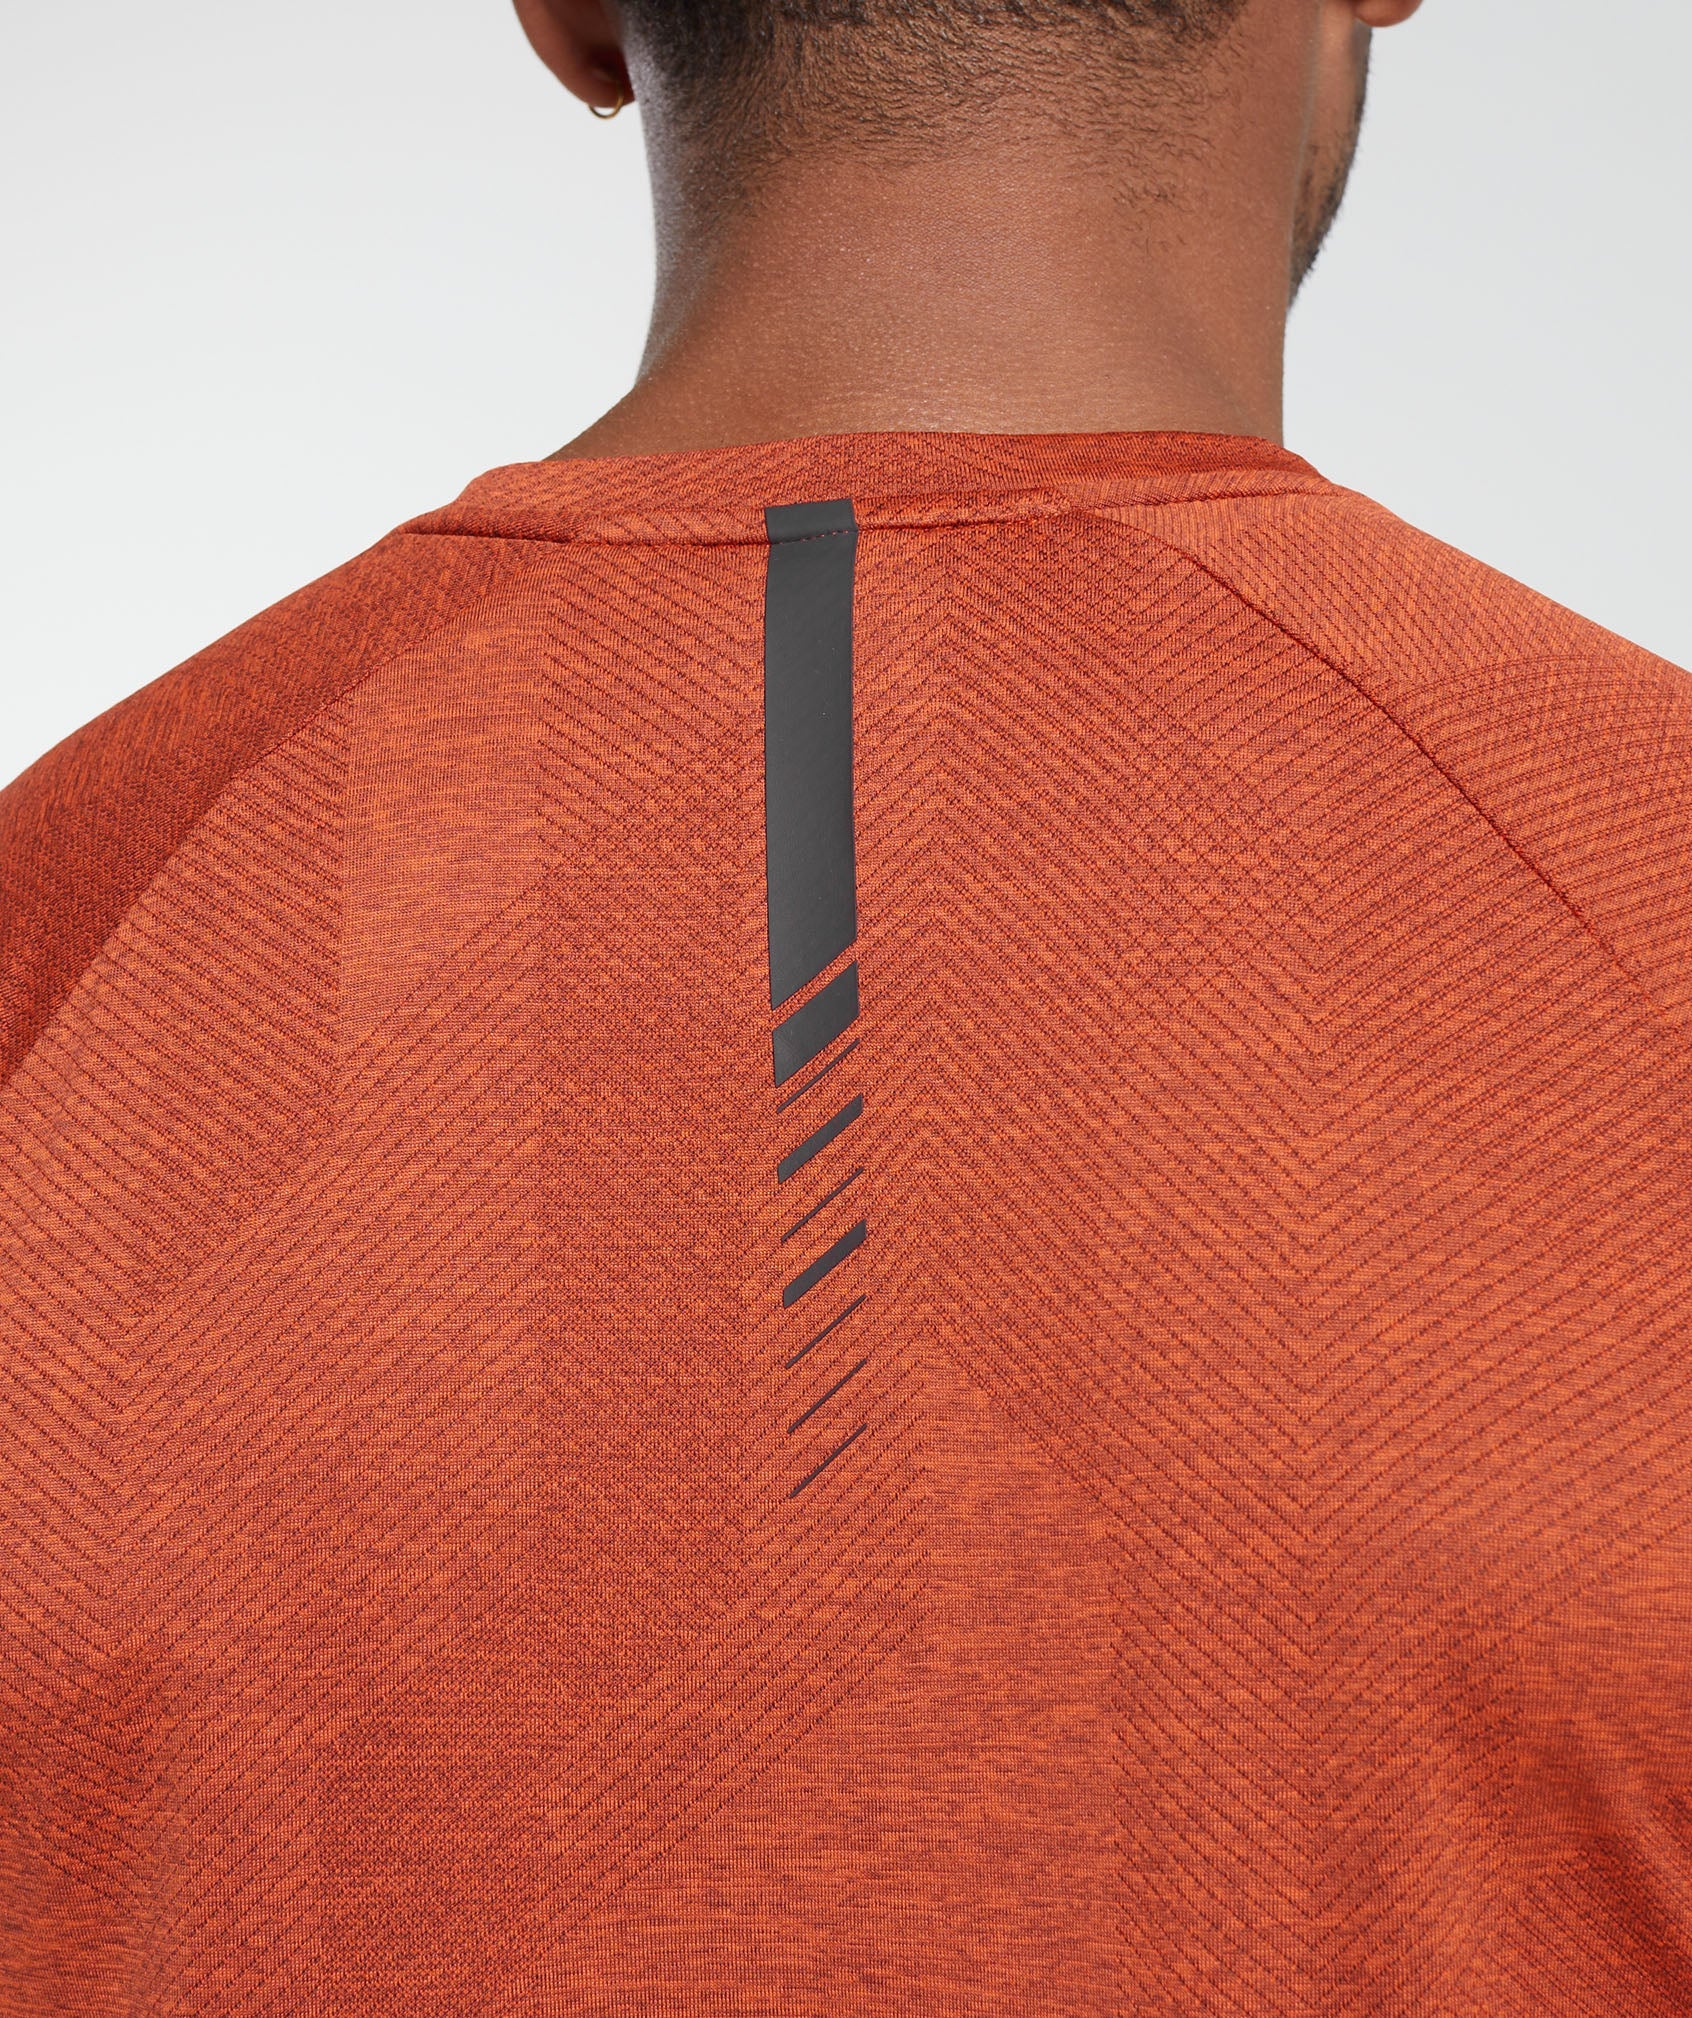 Apex T-Shirt in Rust Orange/Rust Brown - view 6